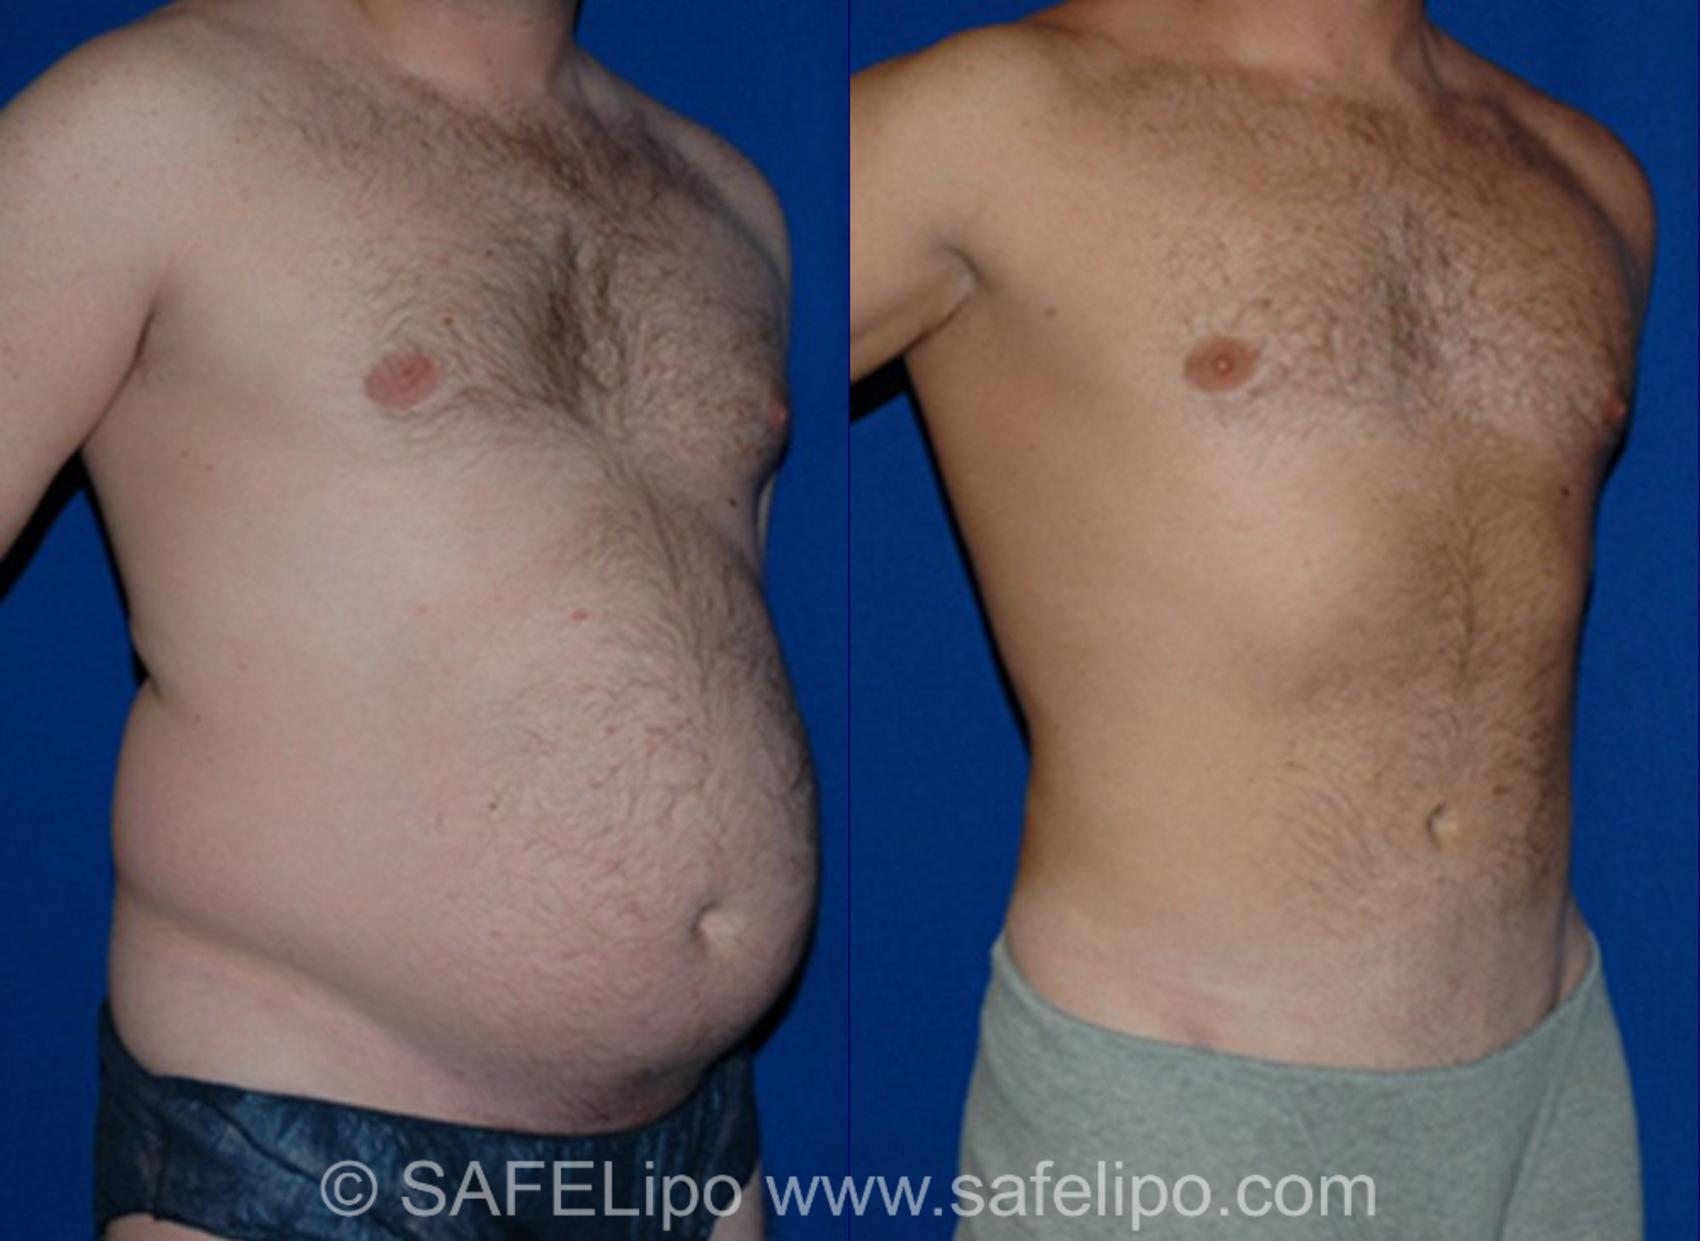 SAFELipoHD® Case 11 Before & After View #2 | SAFELipo®